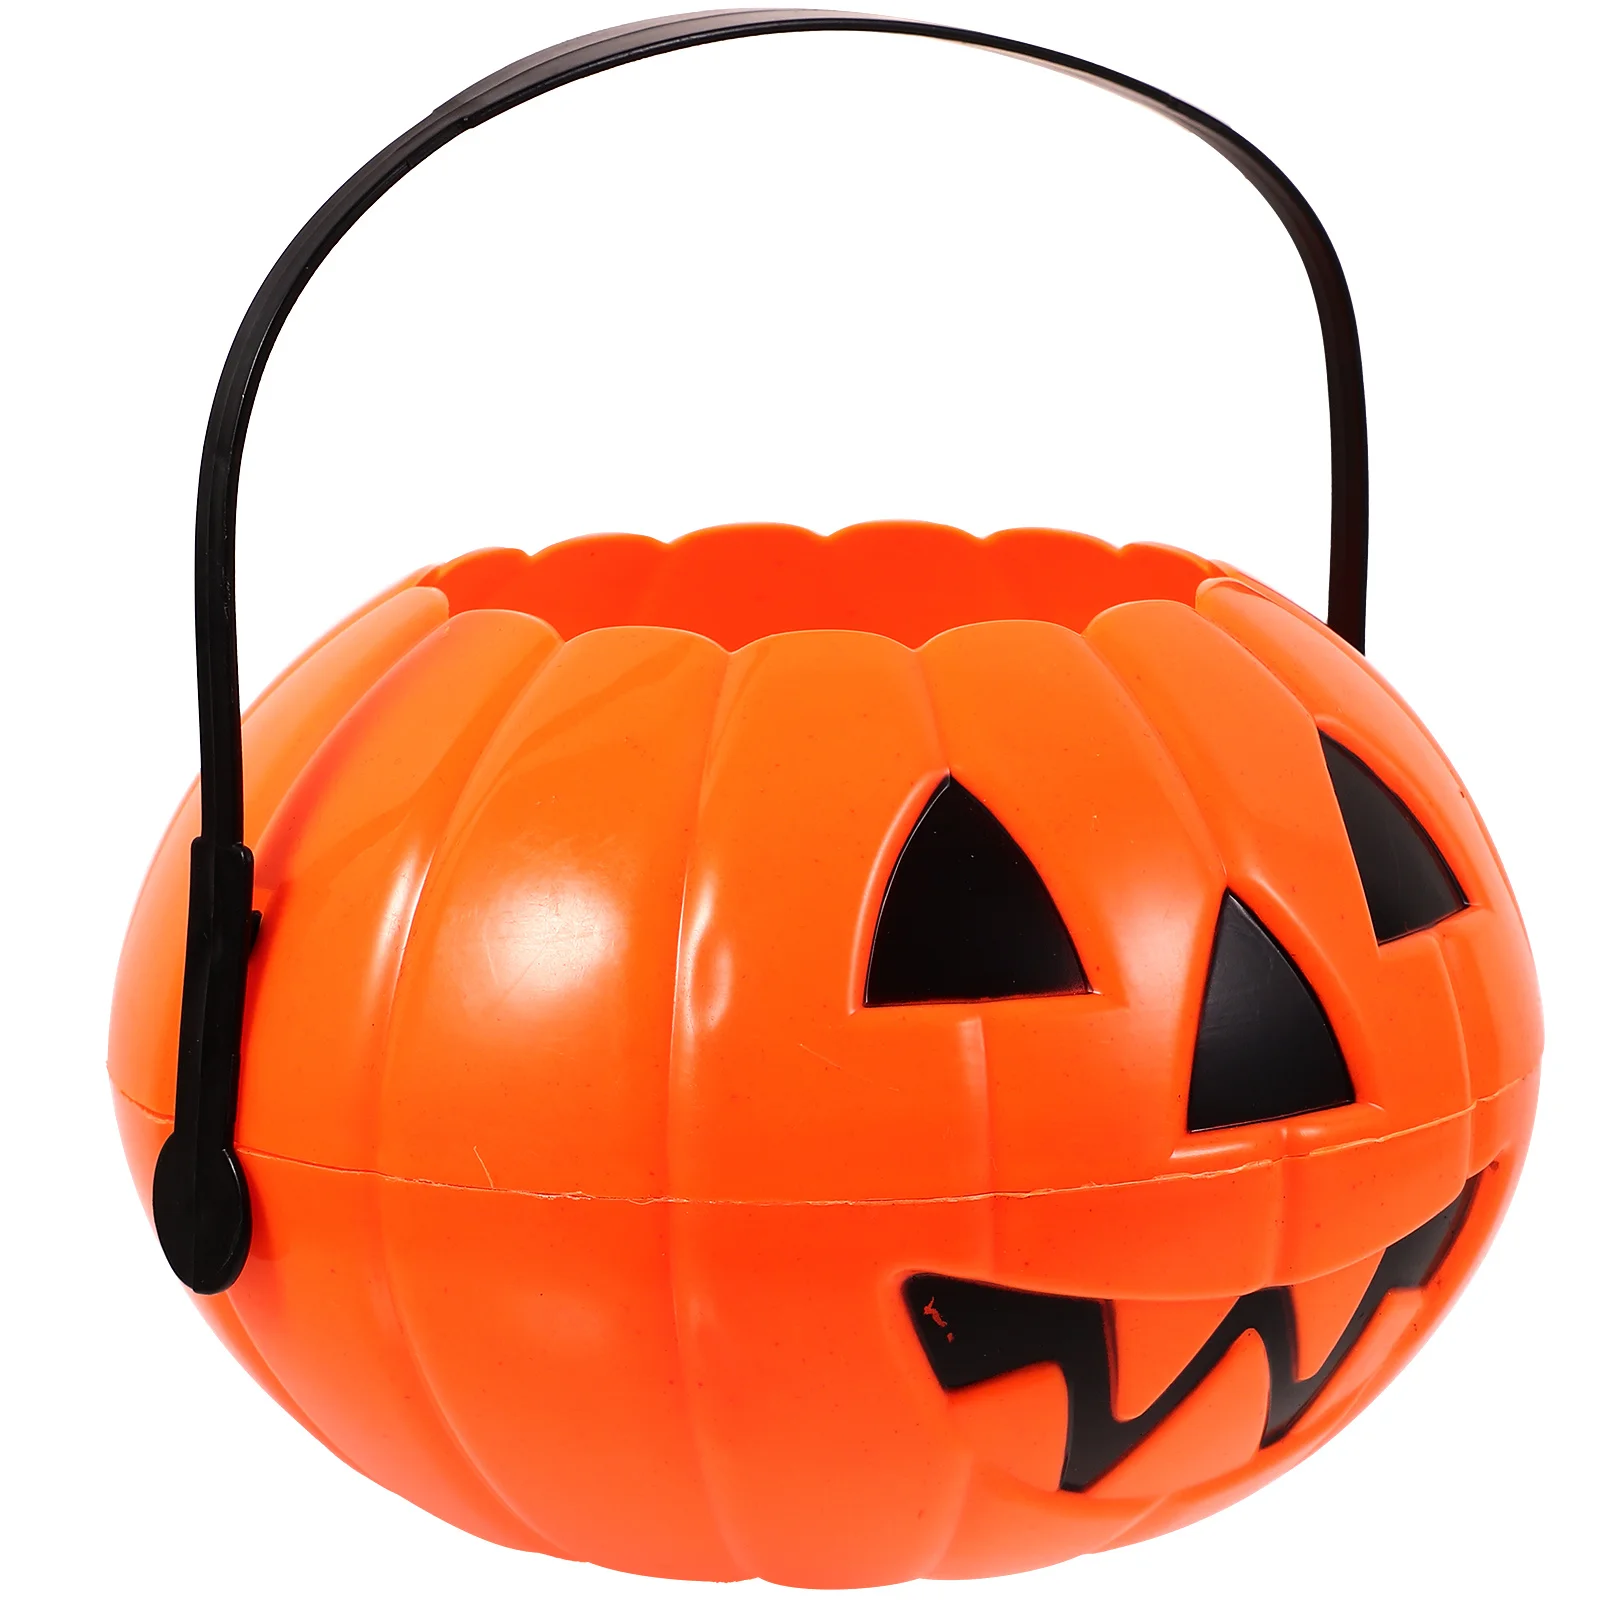 

Halloween Pumpkin Bucket Small Candy Holder Gift Buckets Plastic Bags Barrel Supplies Handles Orange Portable Treat Child Kids